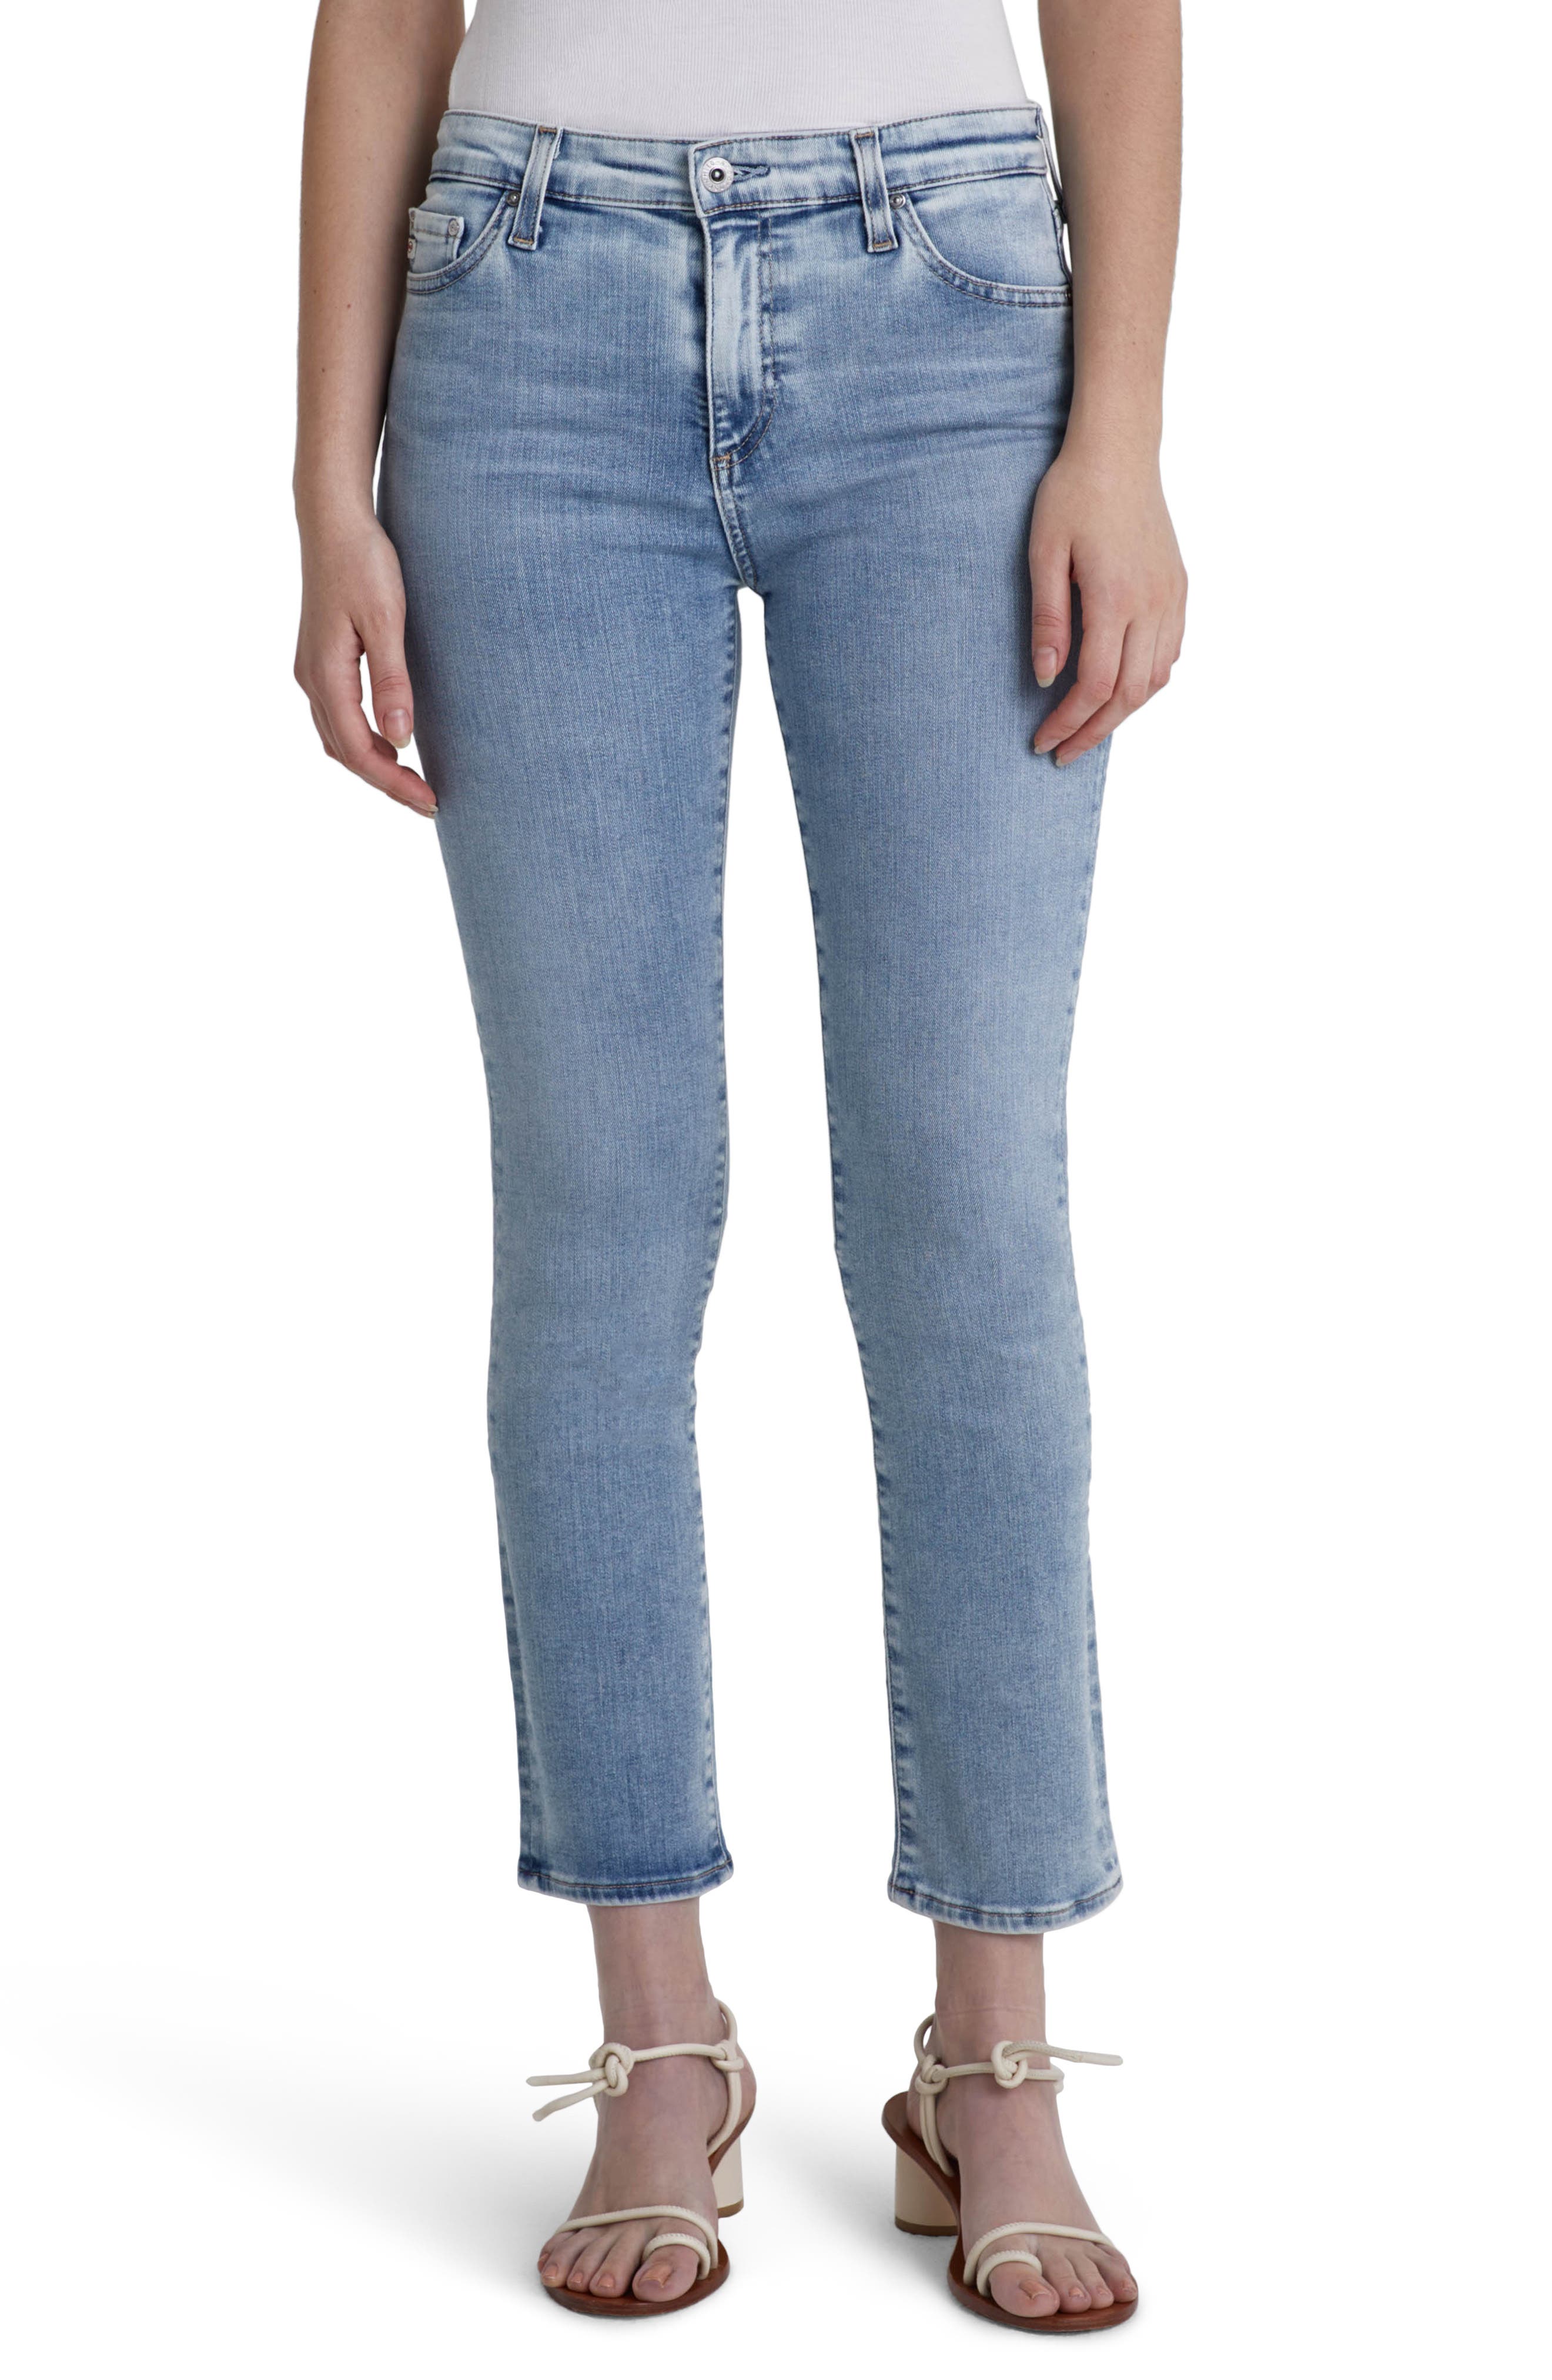 ag jeans womens sale